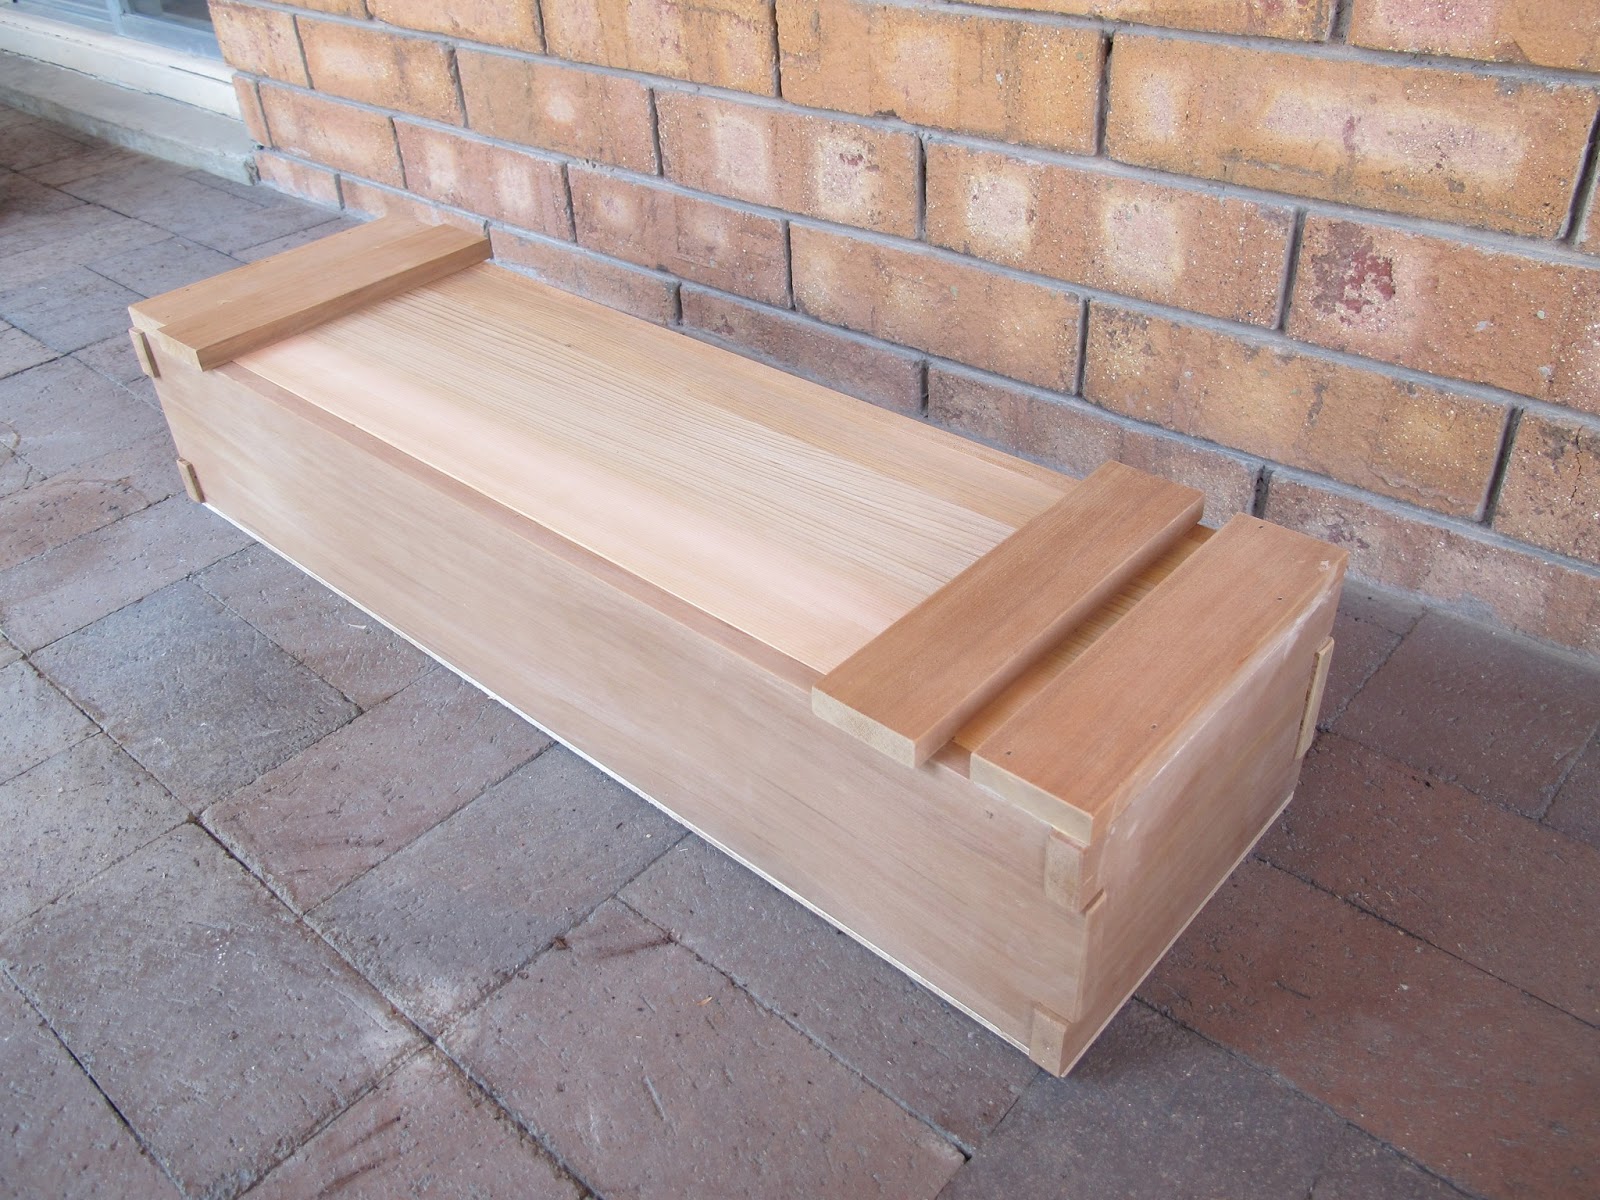 Diem Thi Dai Hoc: Plywood Tool Box Wooden Plans